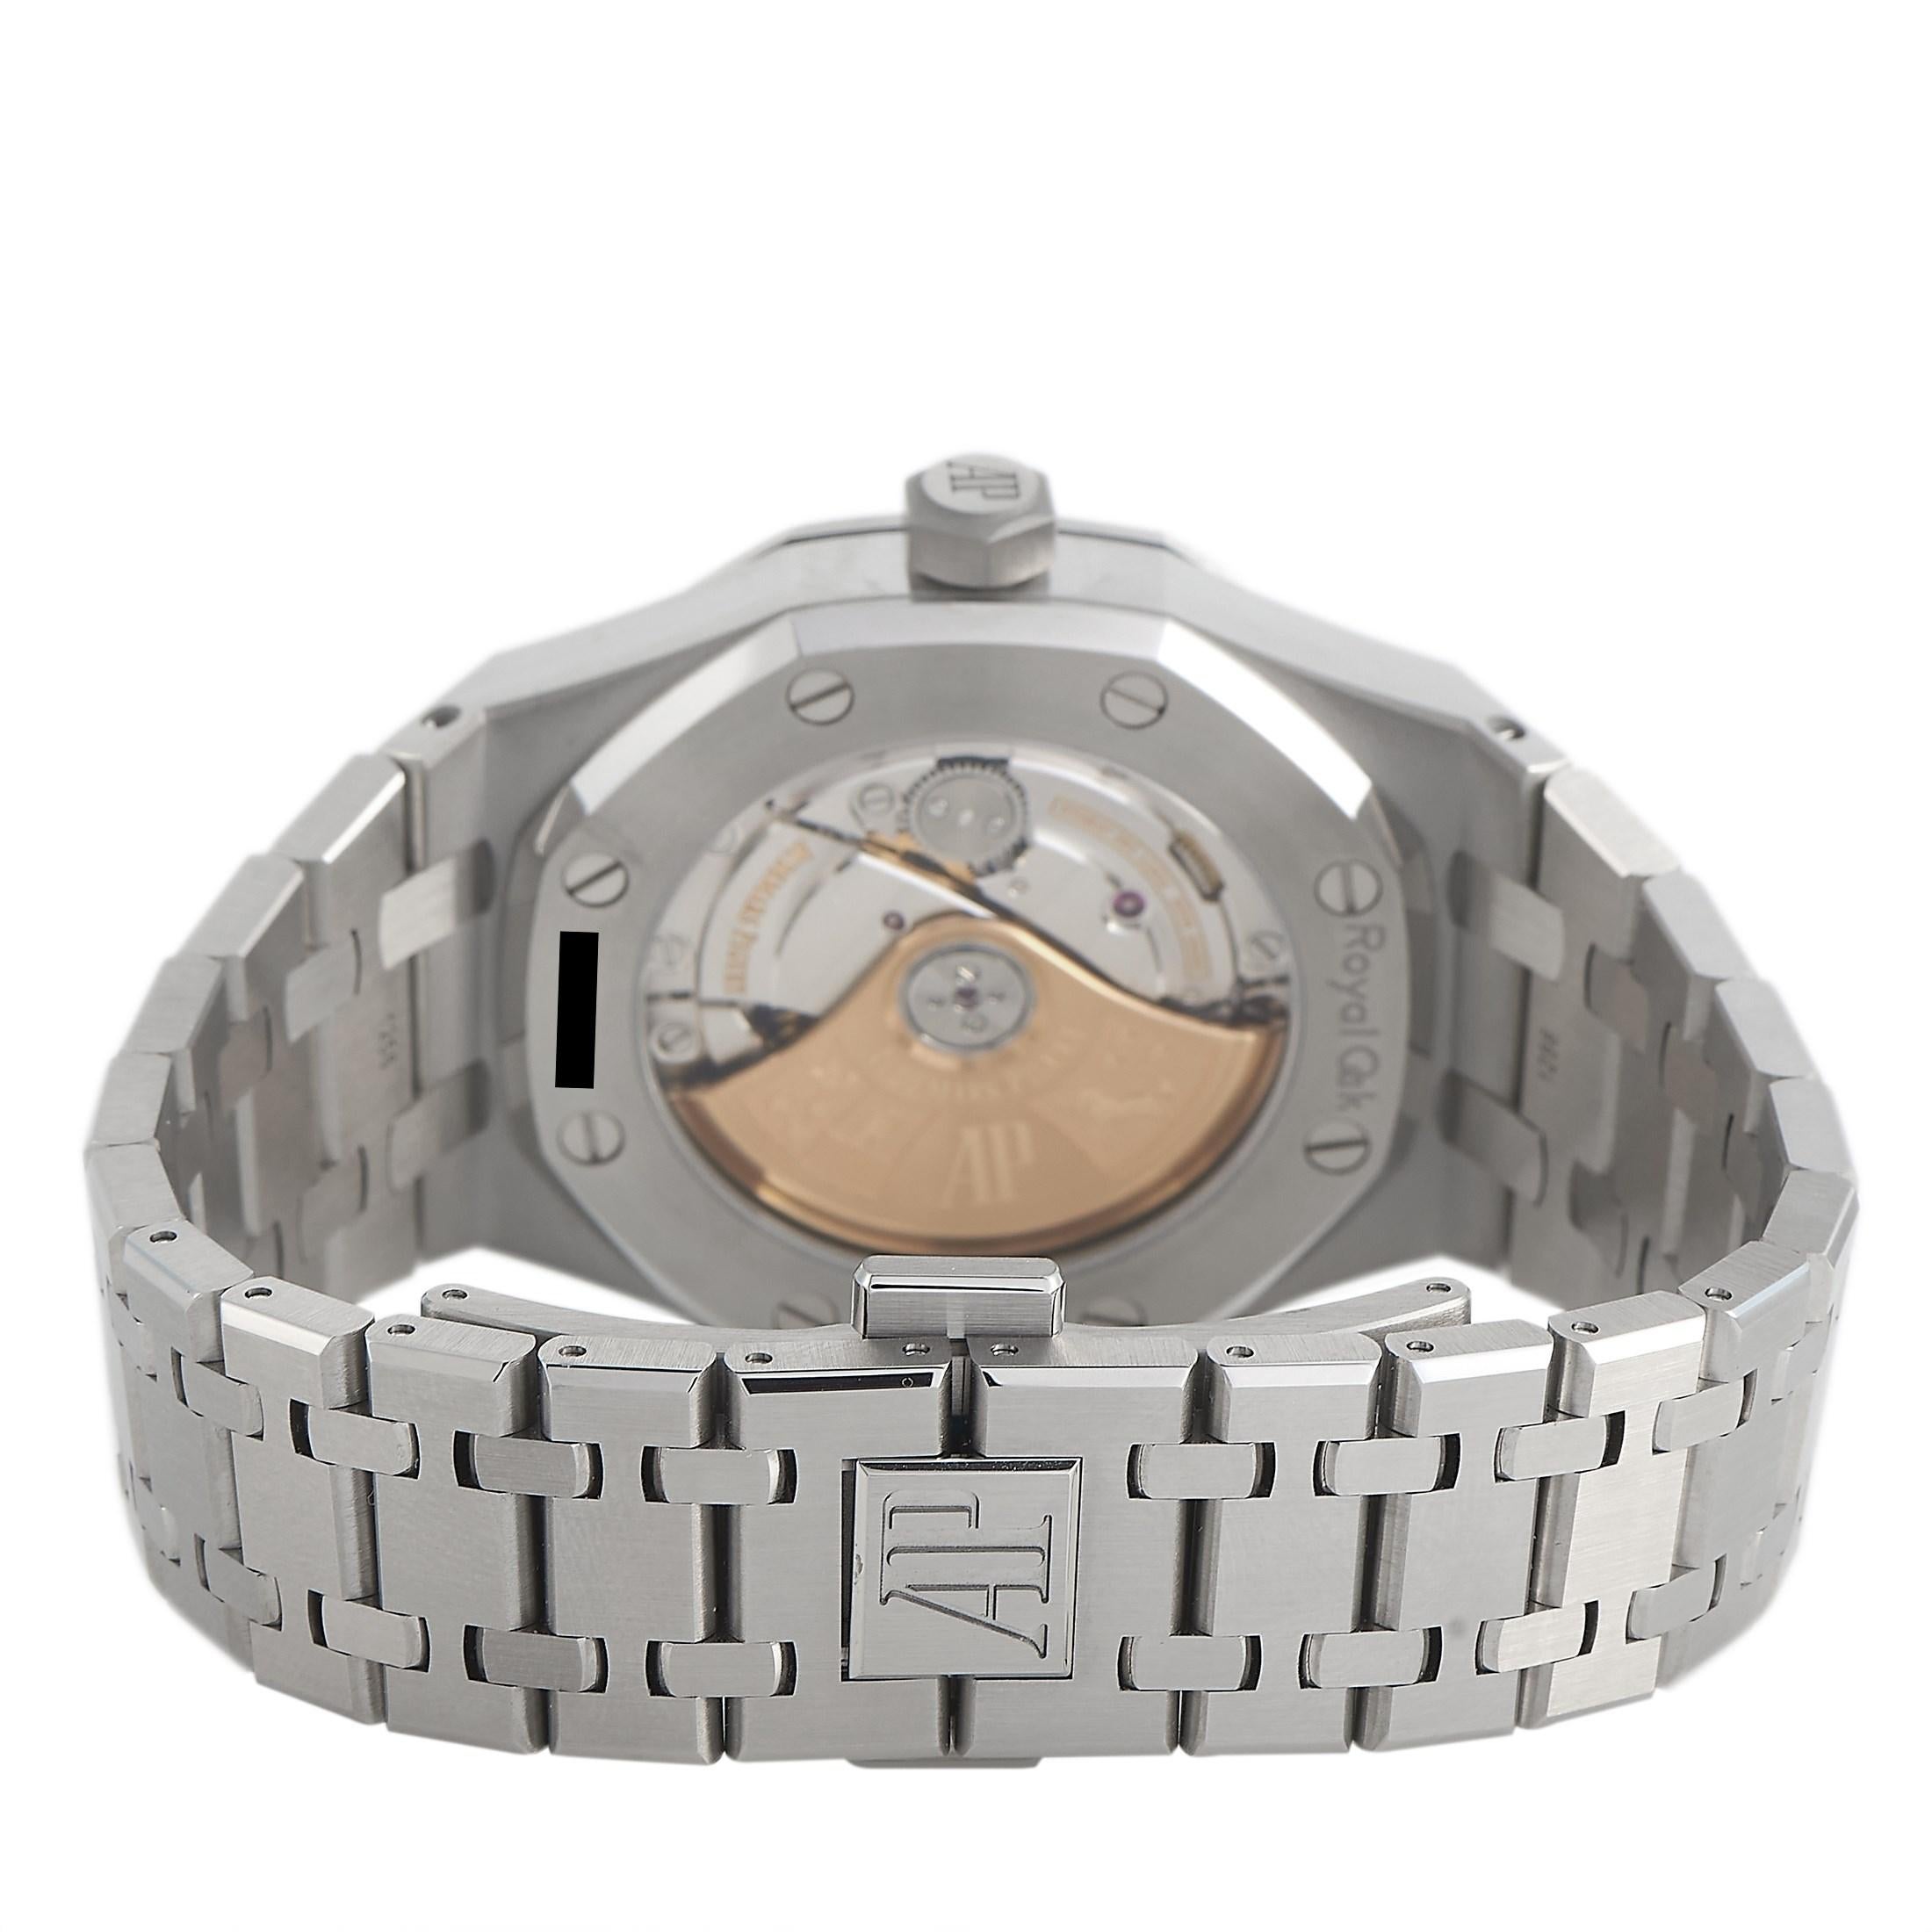 Round Cut Audemars Piguet Royal Oak Diamond Automatic Watch 15451ST.ZZ.1256ST.02